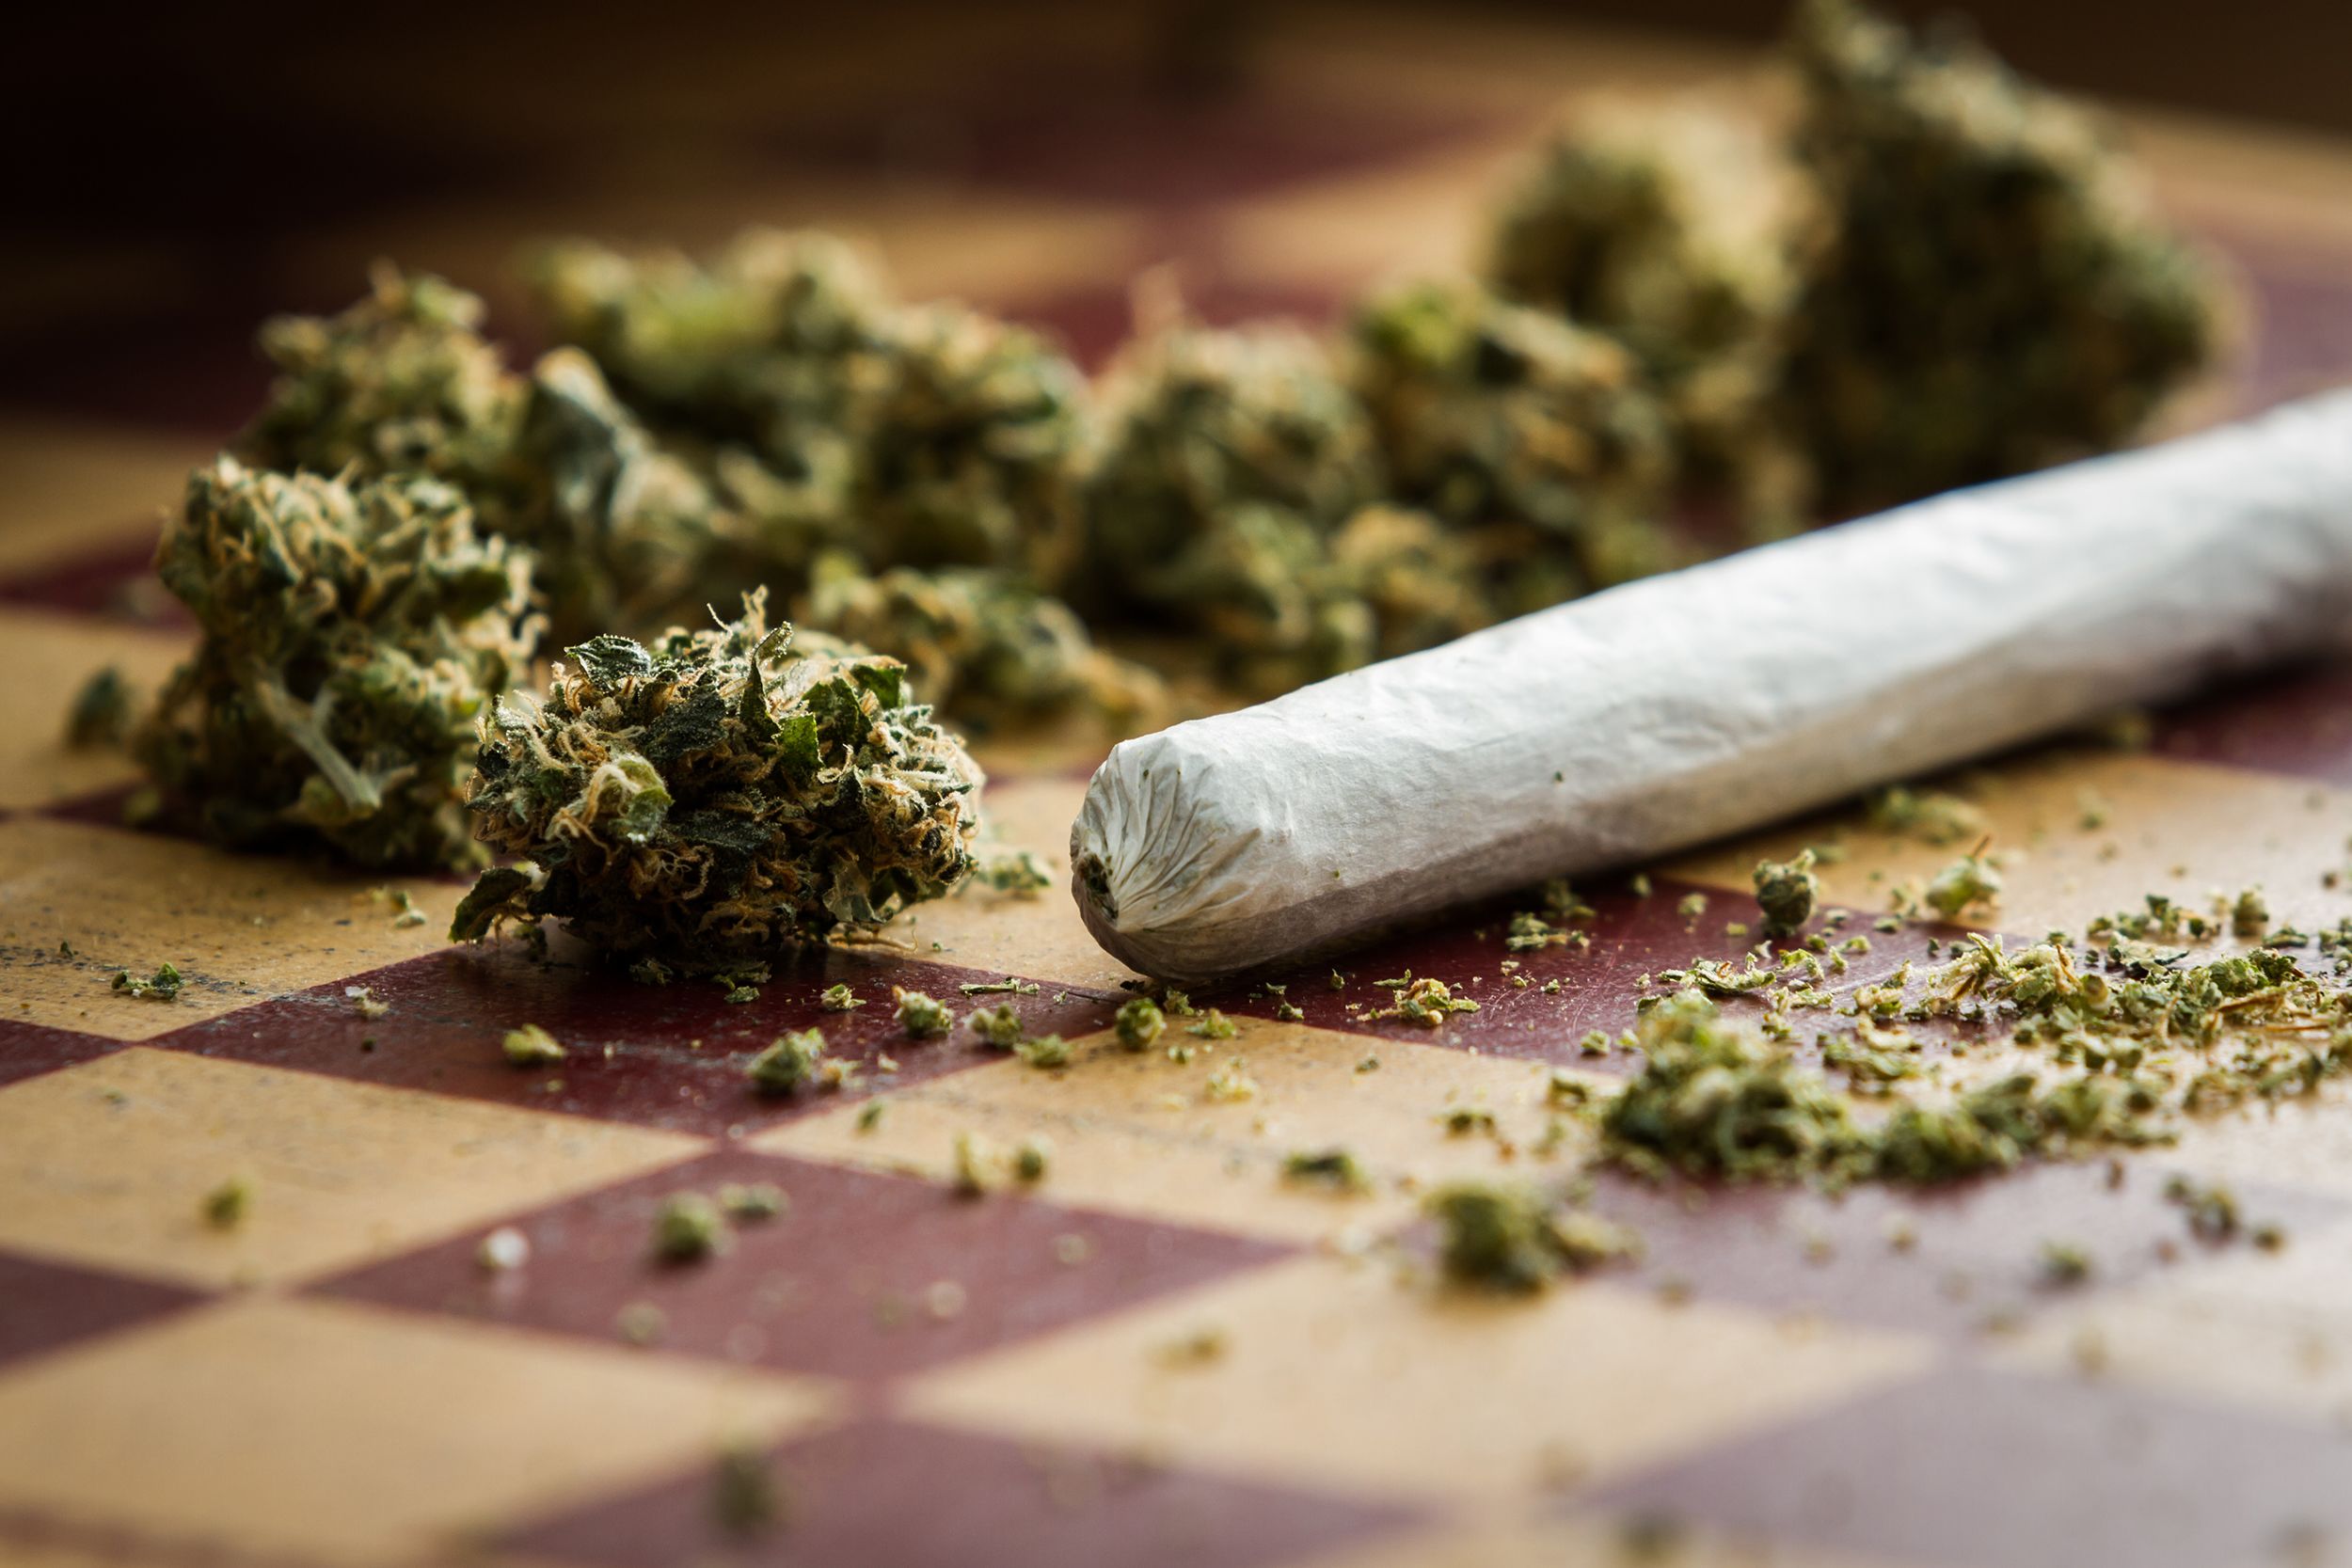 Mississippi becomes 37th state to legalize medical marijuana | CNN Politics